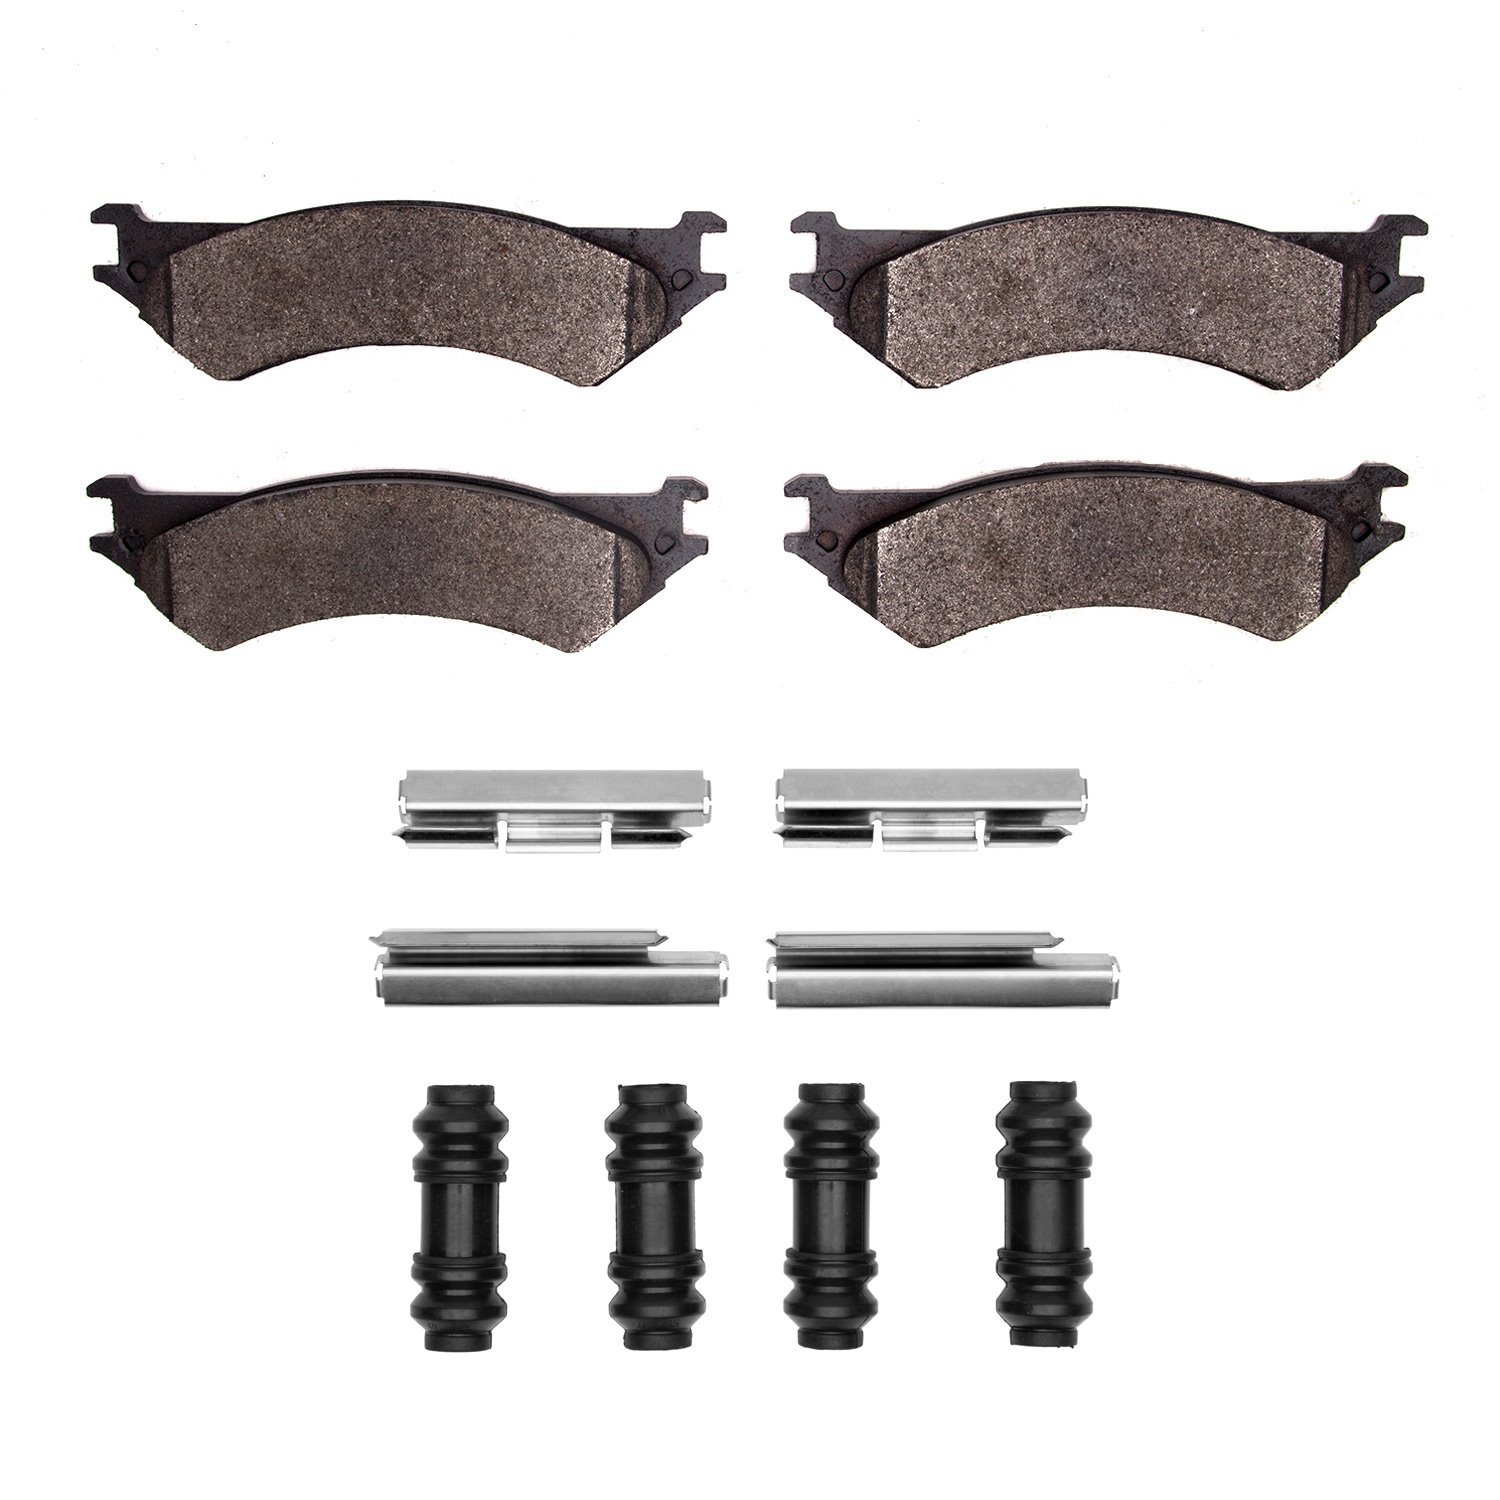 1310-0802-01 3000-Series Ceramic Brake Pads & Hardware Kit, 1999-2007 Ford/Lincoln/Mercury/Mazda, Position: Rear